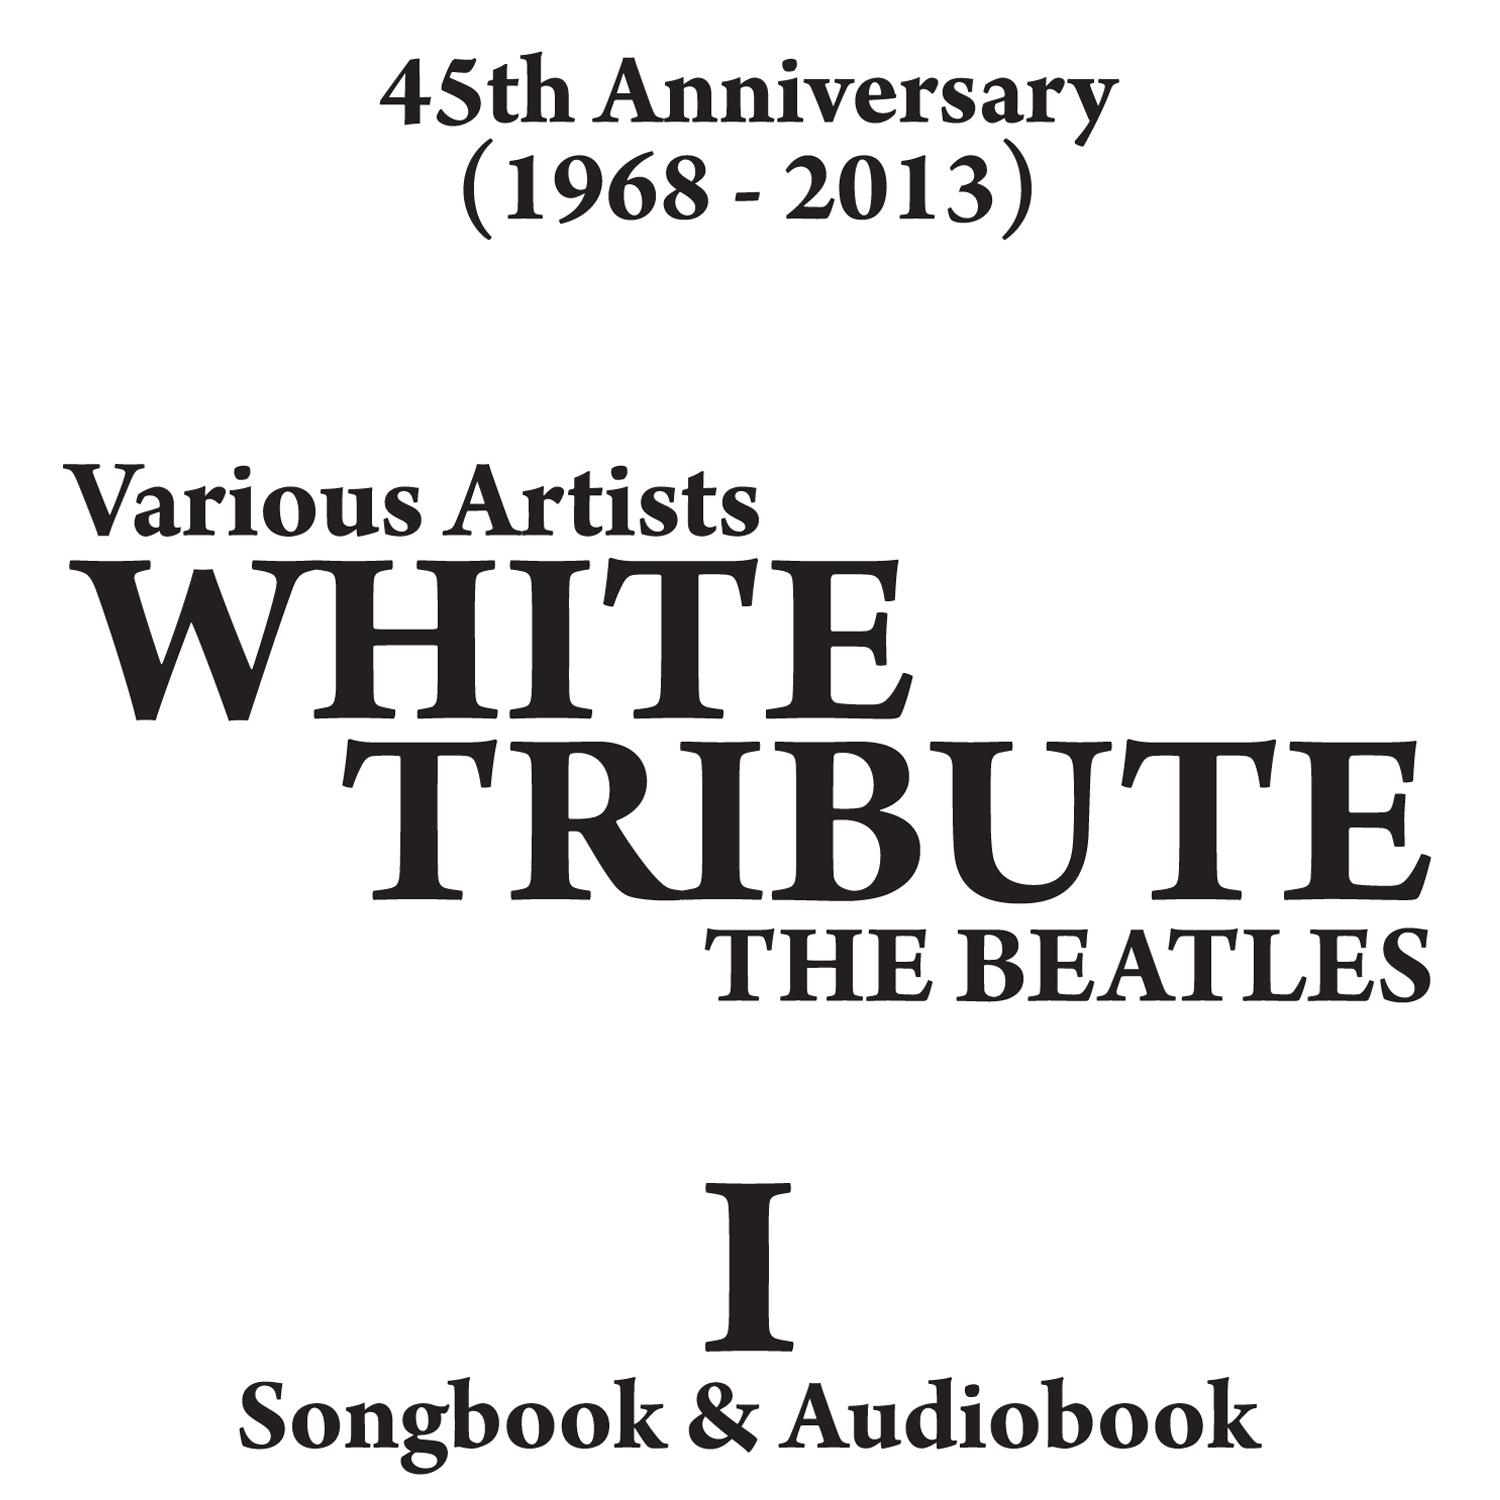 White Album Tribute (Part One) 45th Anniversary [1968 - 2013] - Songbook & Audiobook